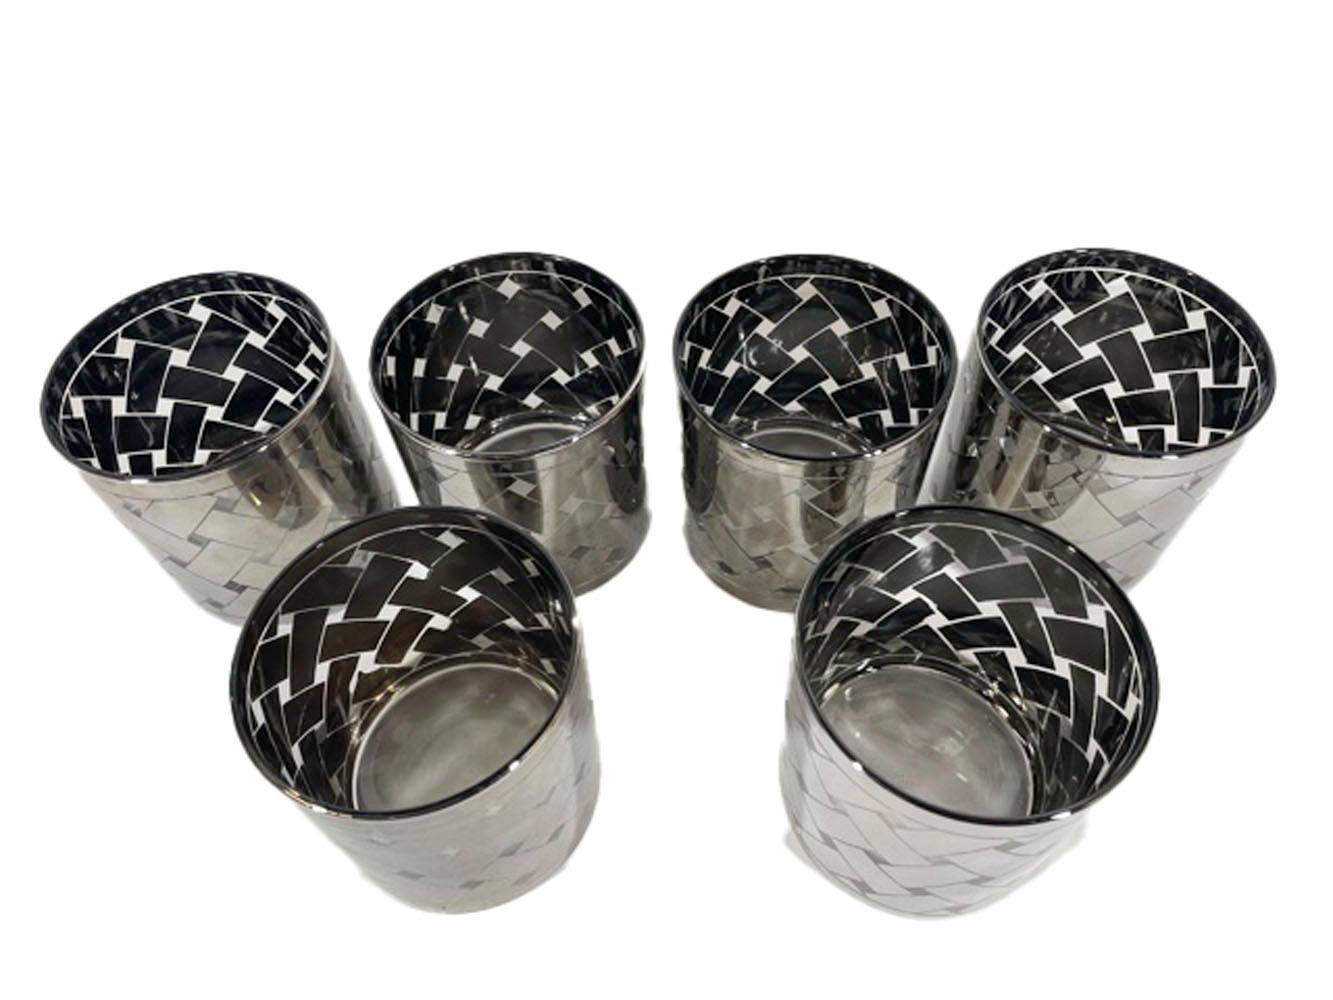 Set of 6 vintage rocks glasses in smooth, shinny, silver basketweave pattern.